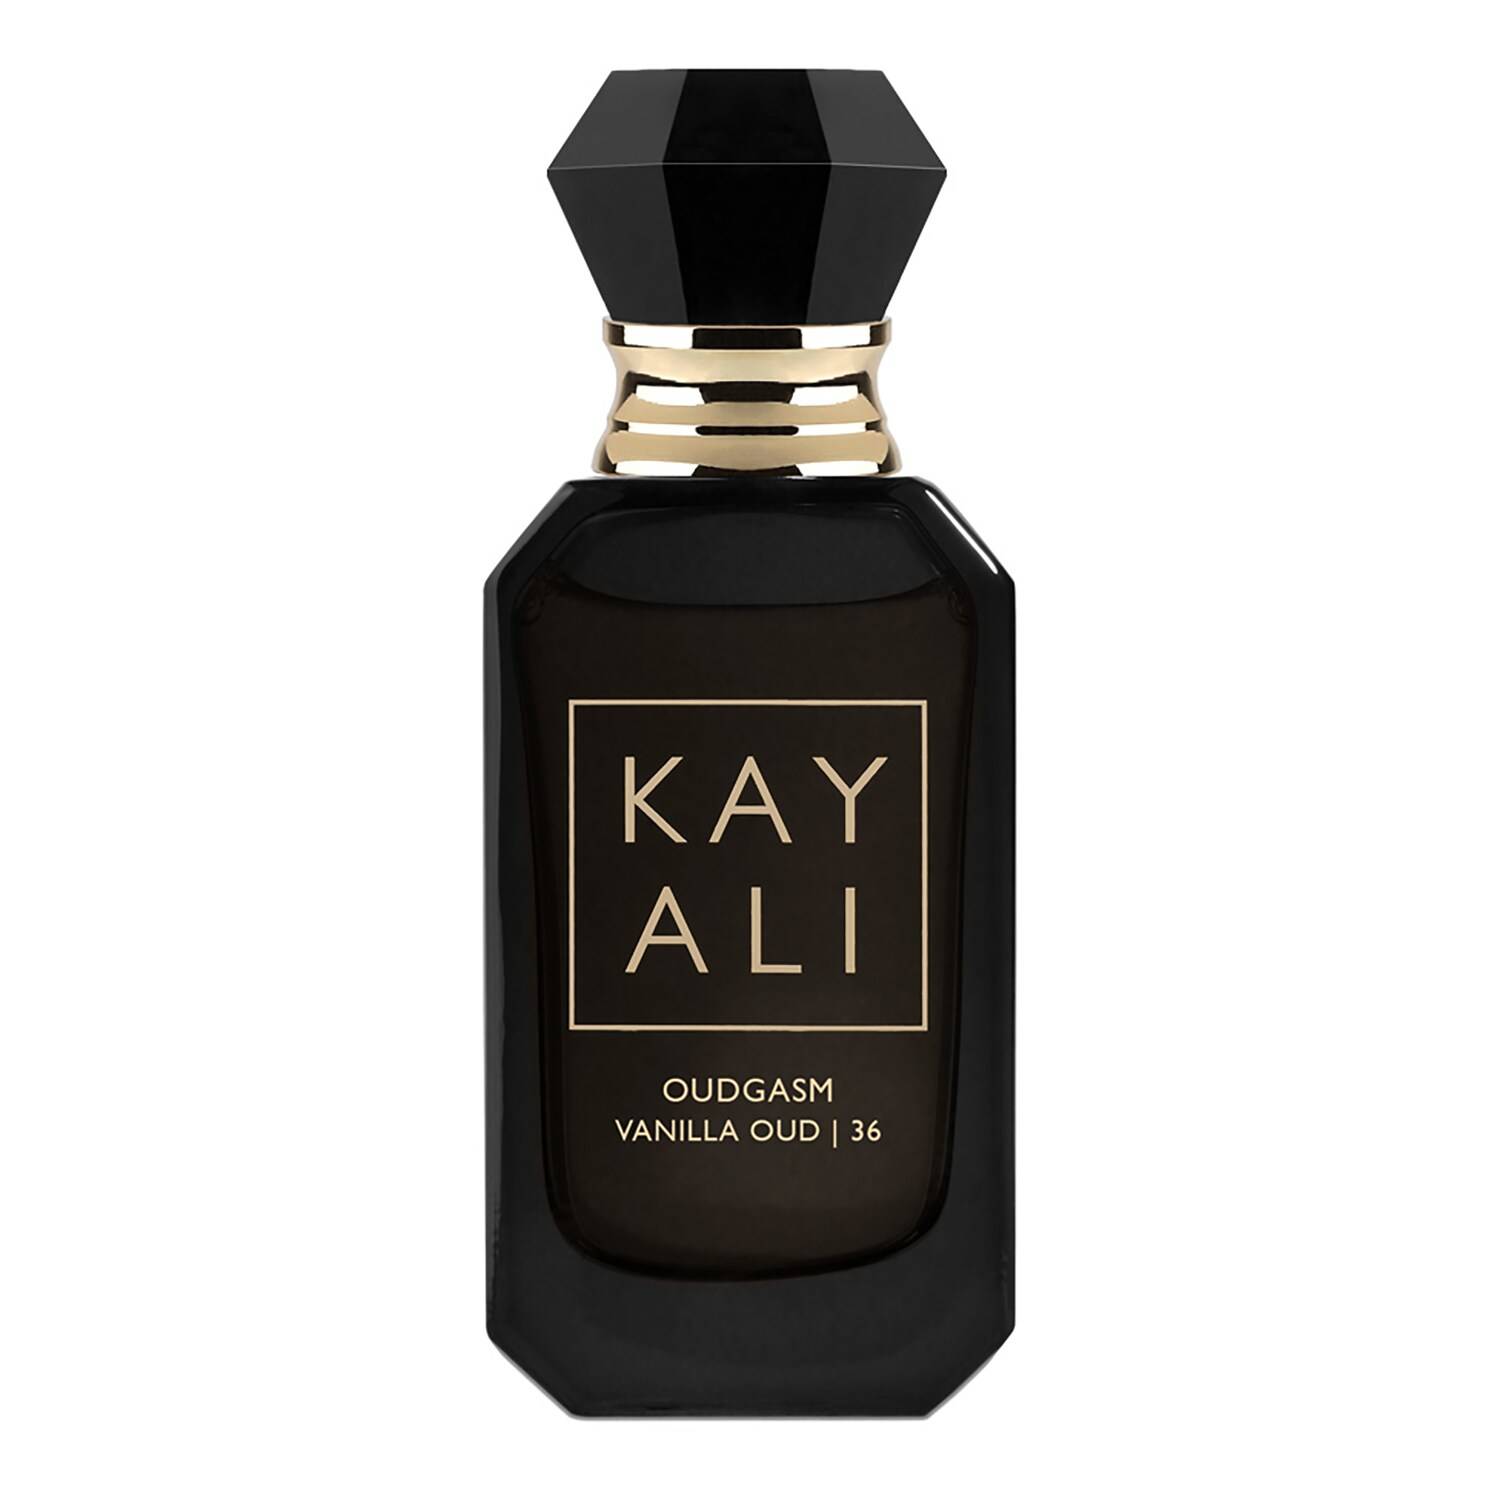 Kayali Oudgasm Vanilla Oud - 36 Eau De Parfum Intense 10Ml